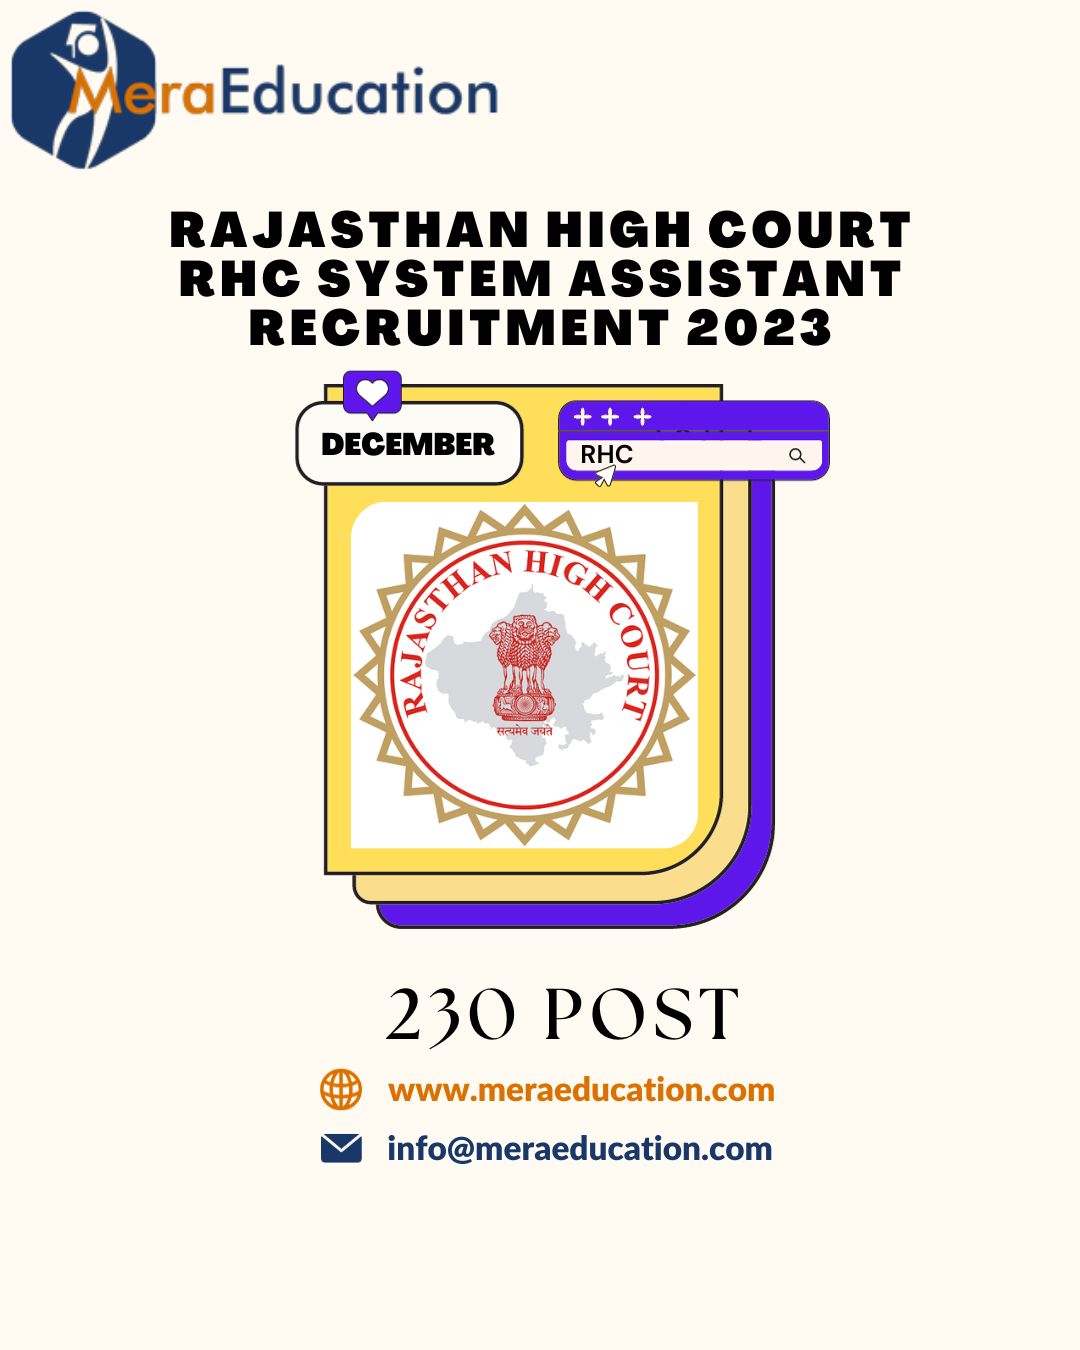 Rajasthan High Court RHC System Assistant Recruitment